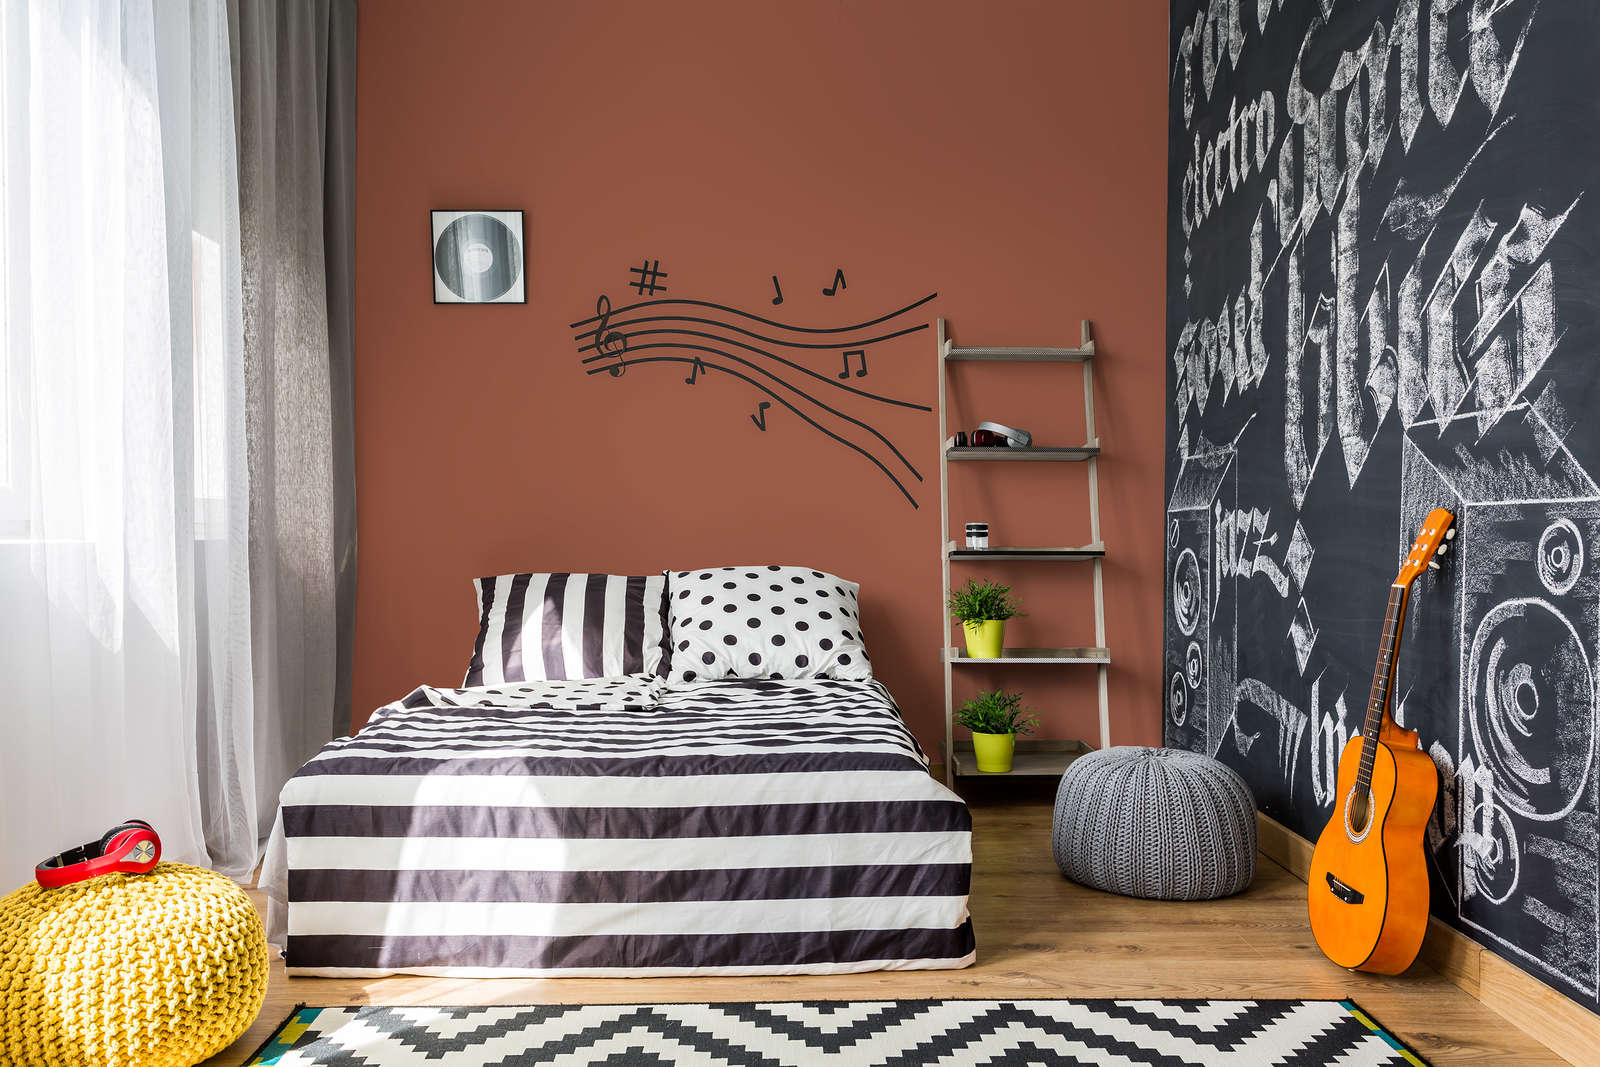             Premium Wall Paint Sensitive Terracotta »Pretty Peach« NW908 – 5 litre
        